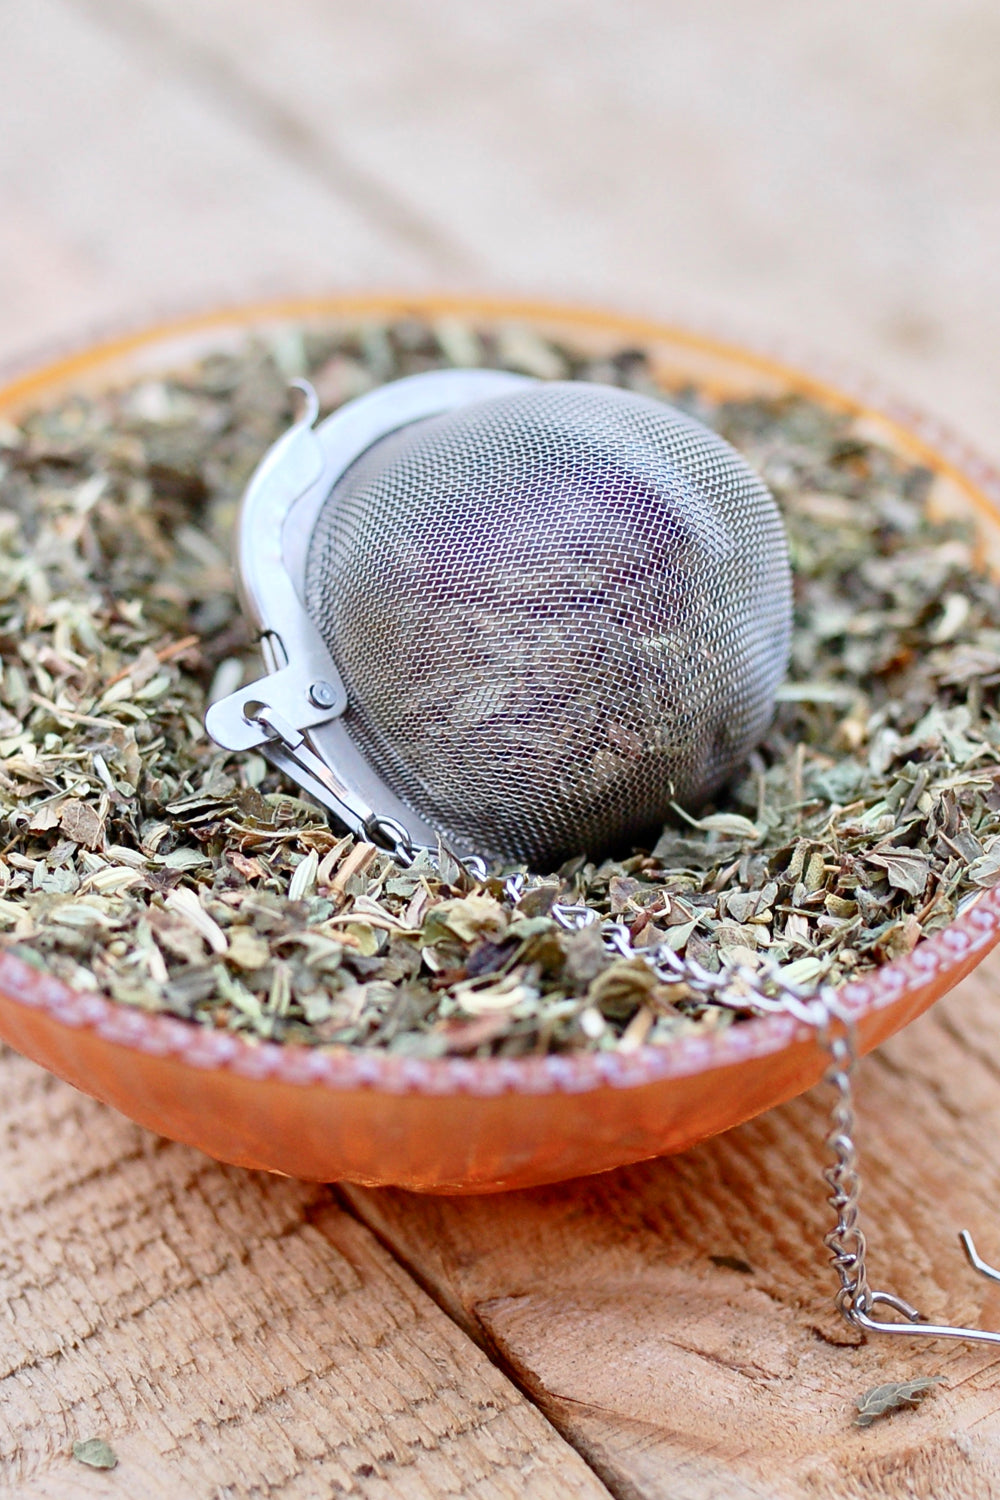 Tea Ball Infuser- large 3" Mesh tea ball- Sunflower and Heart charm ball - Lizzy Lane Farm Apothecary